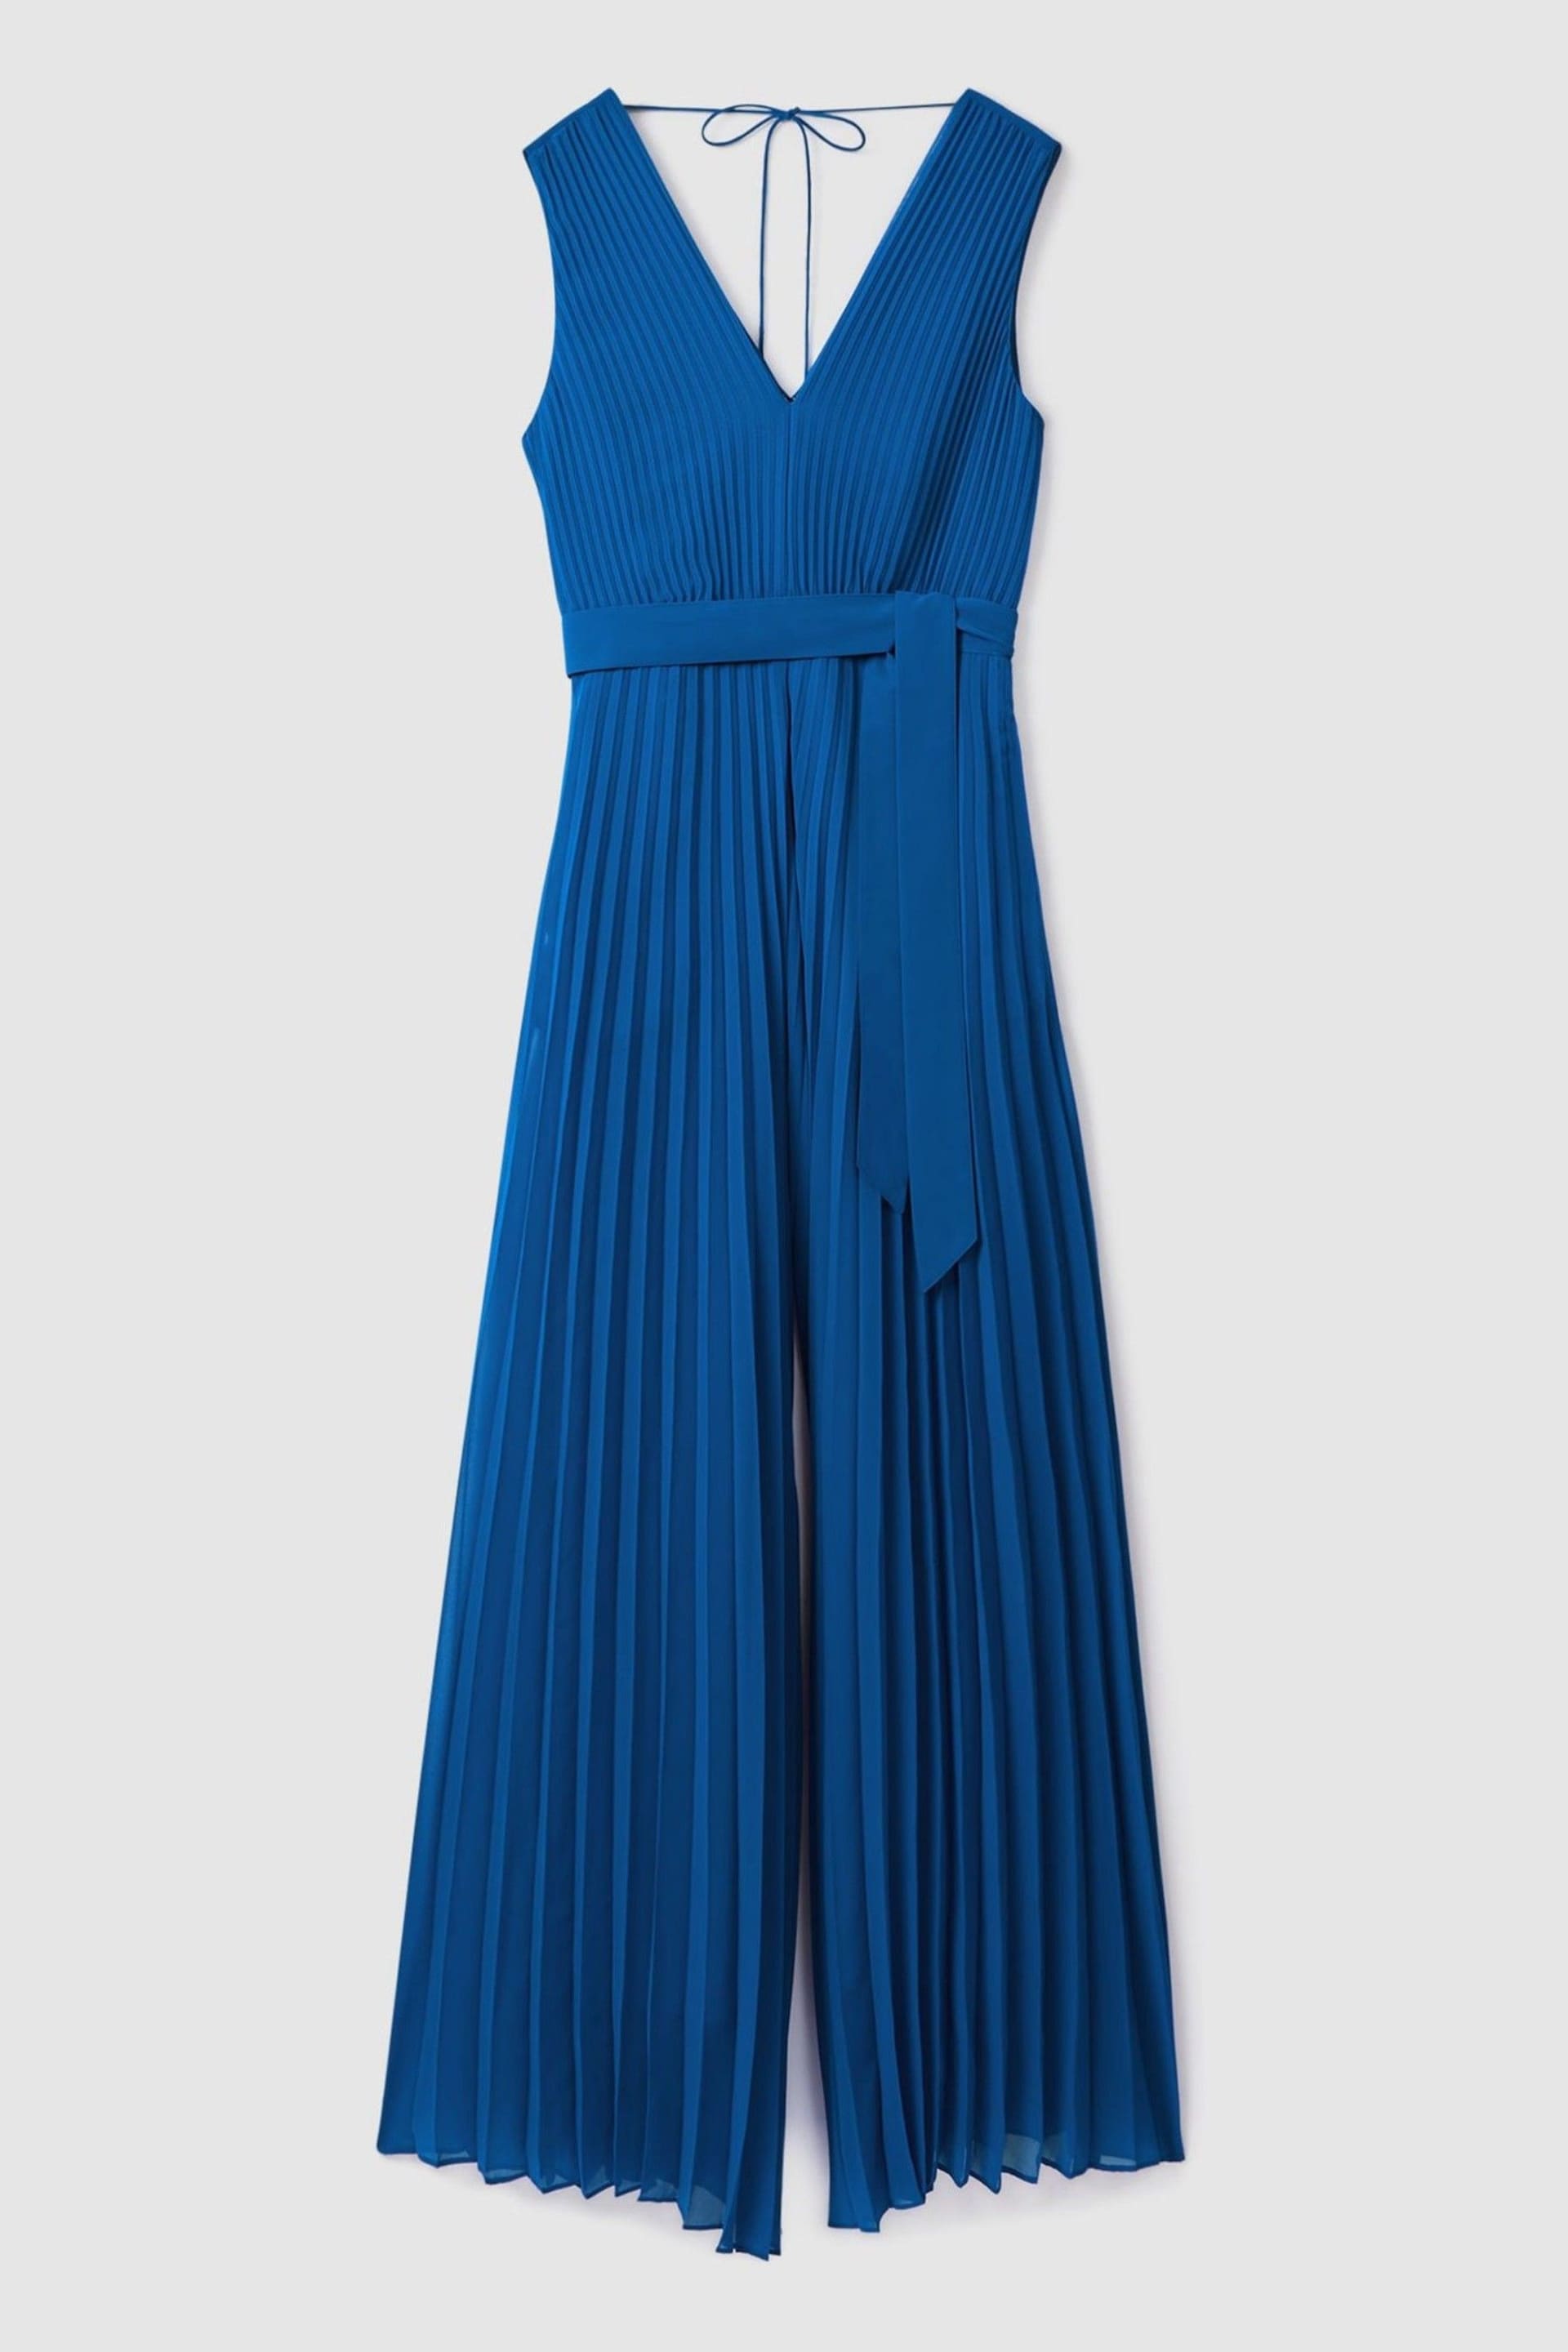 Reiss Cobalt Blue Estelle Pleated Belted Jumpsuit - Image 2 of 6